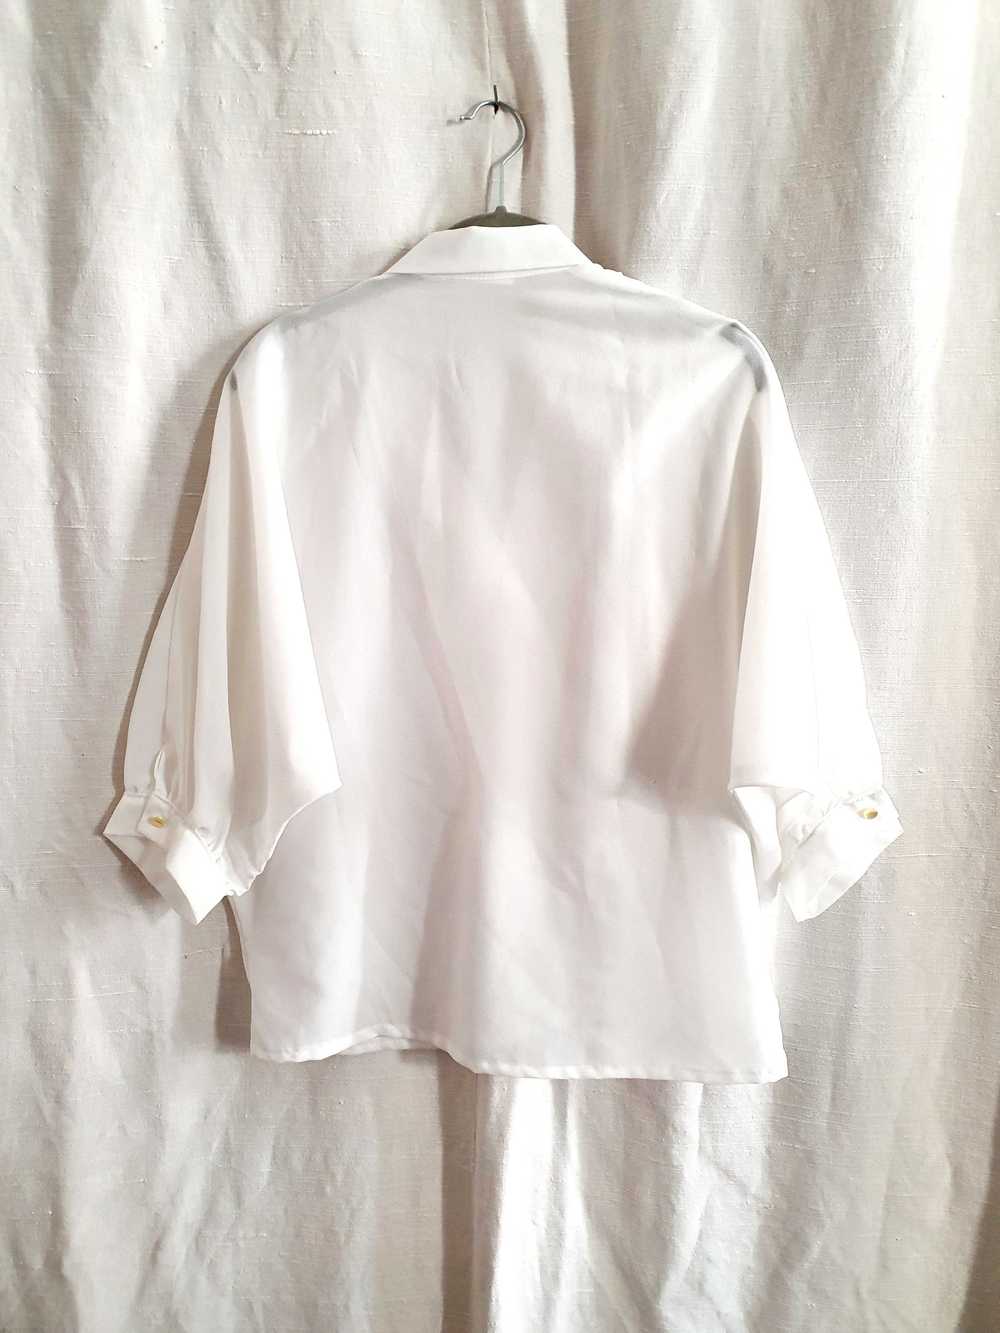 80's white shirt - Beautiful batwing shirt, very … - image 2